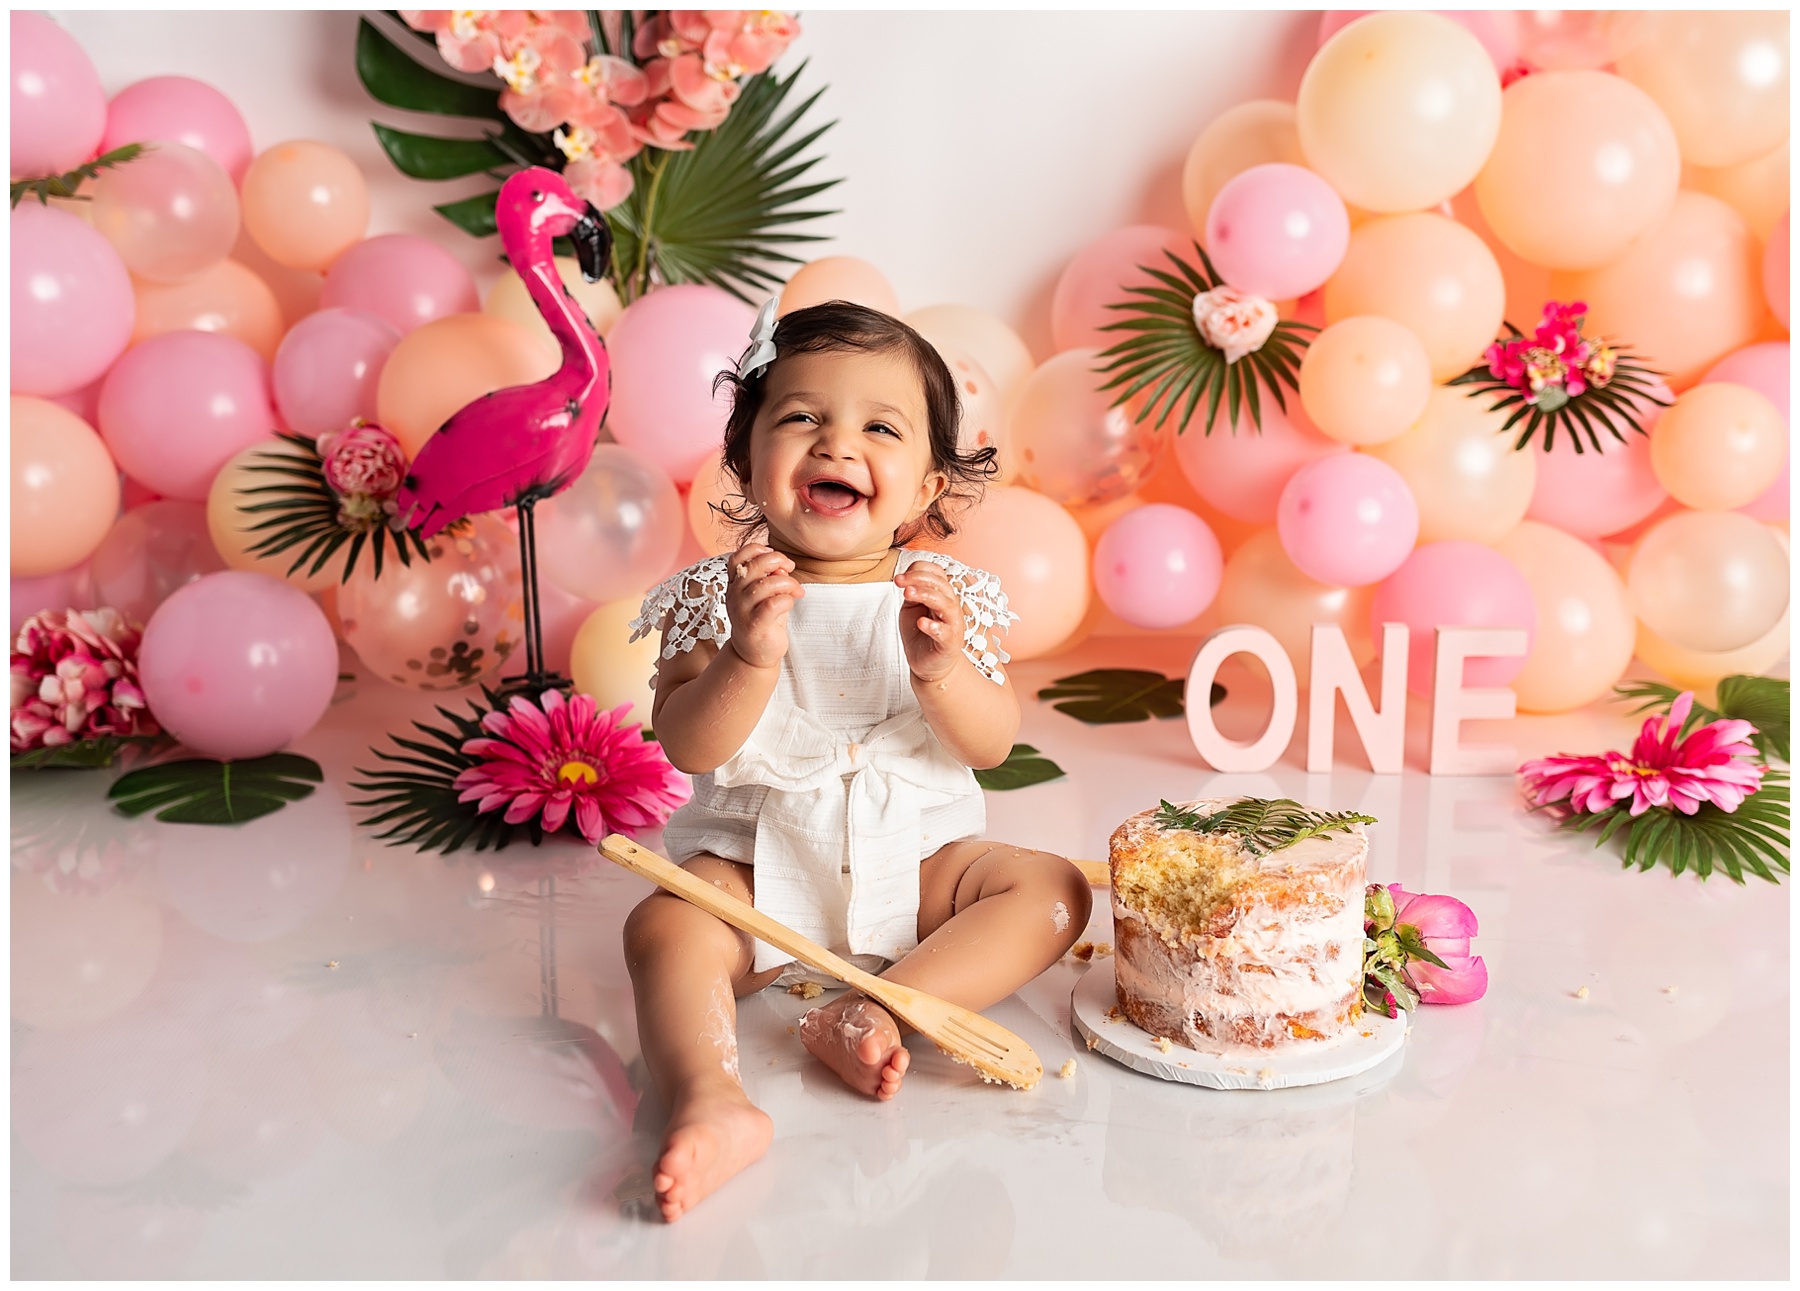 Smash Cake Ideas – Happiest Baby